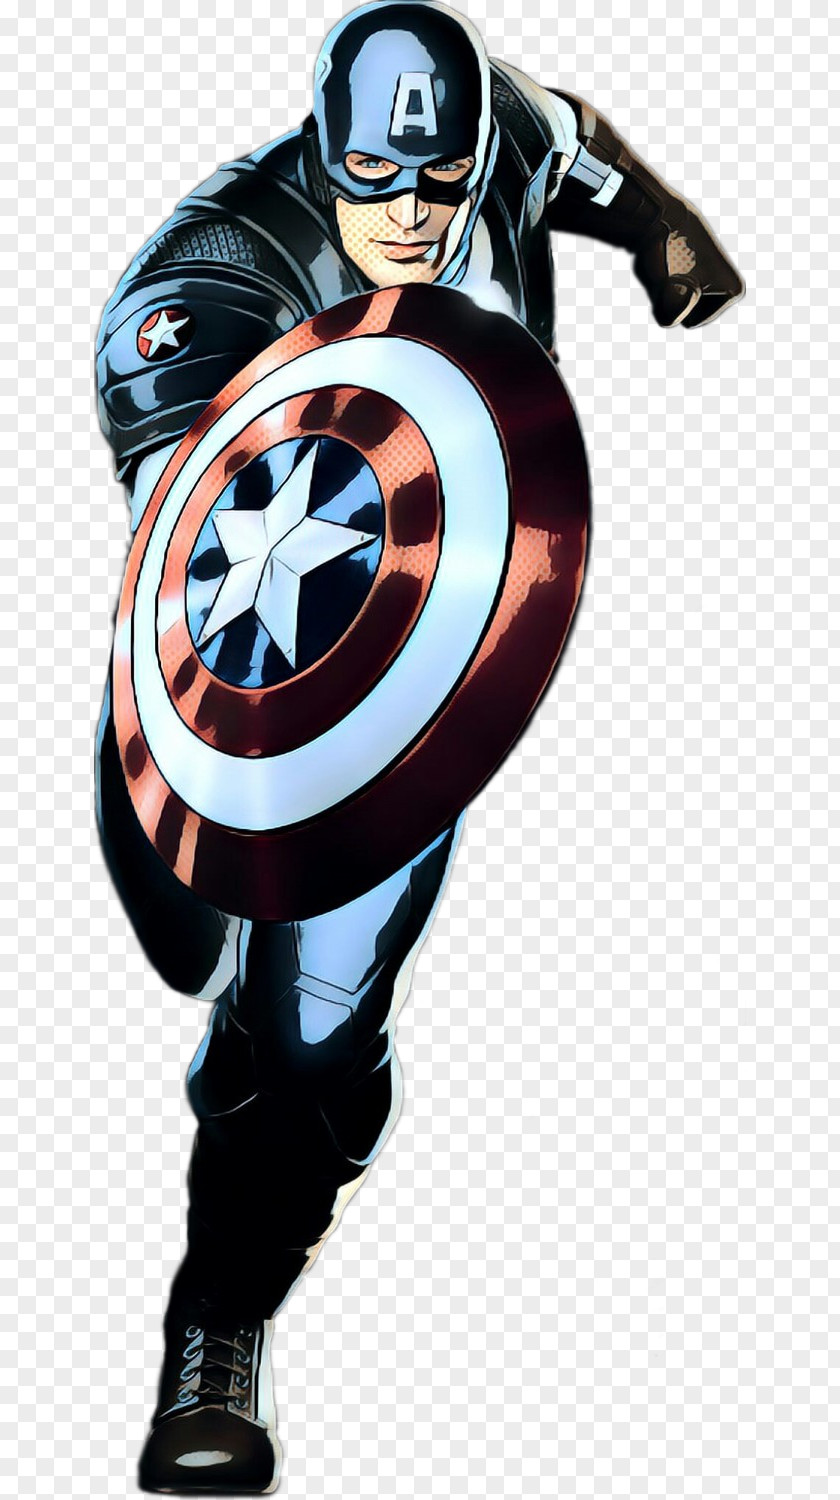 Captain America: The First Avenger Bucky Barnes Chris Evans Iron Man PNG